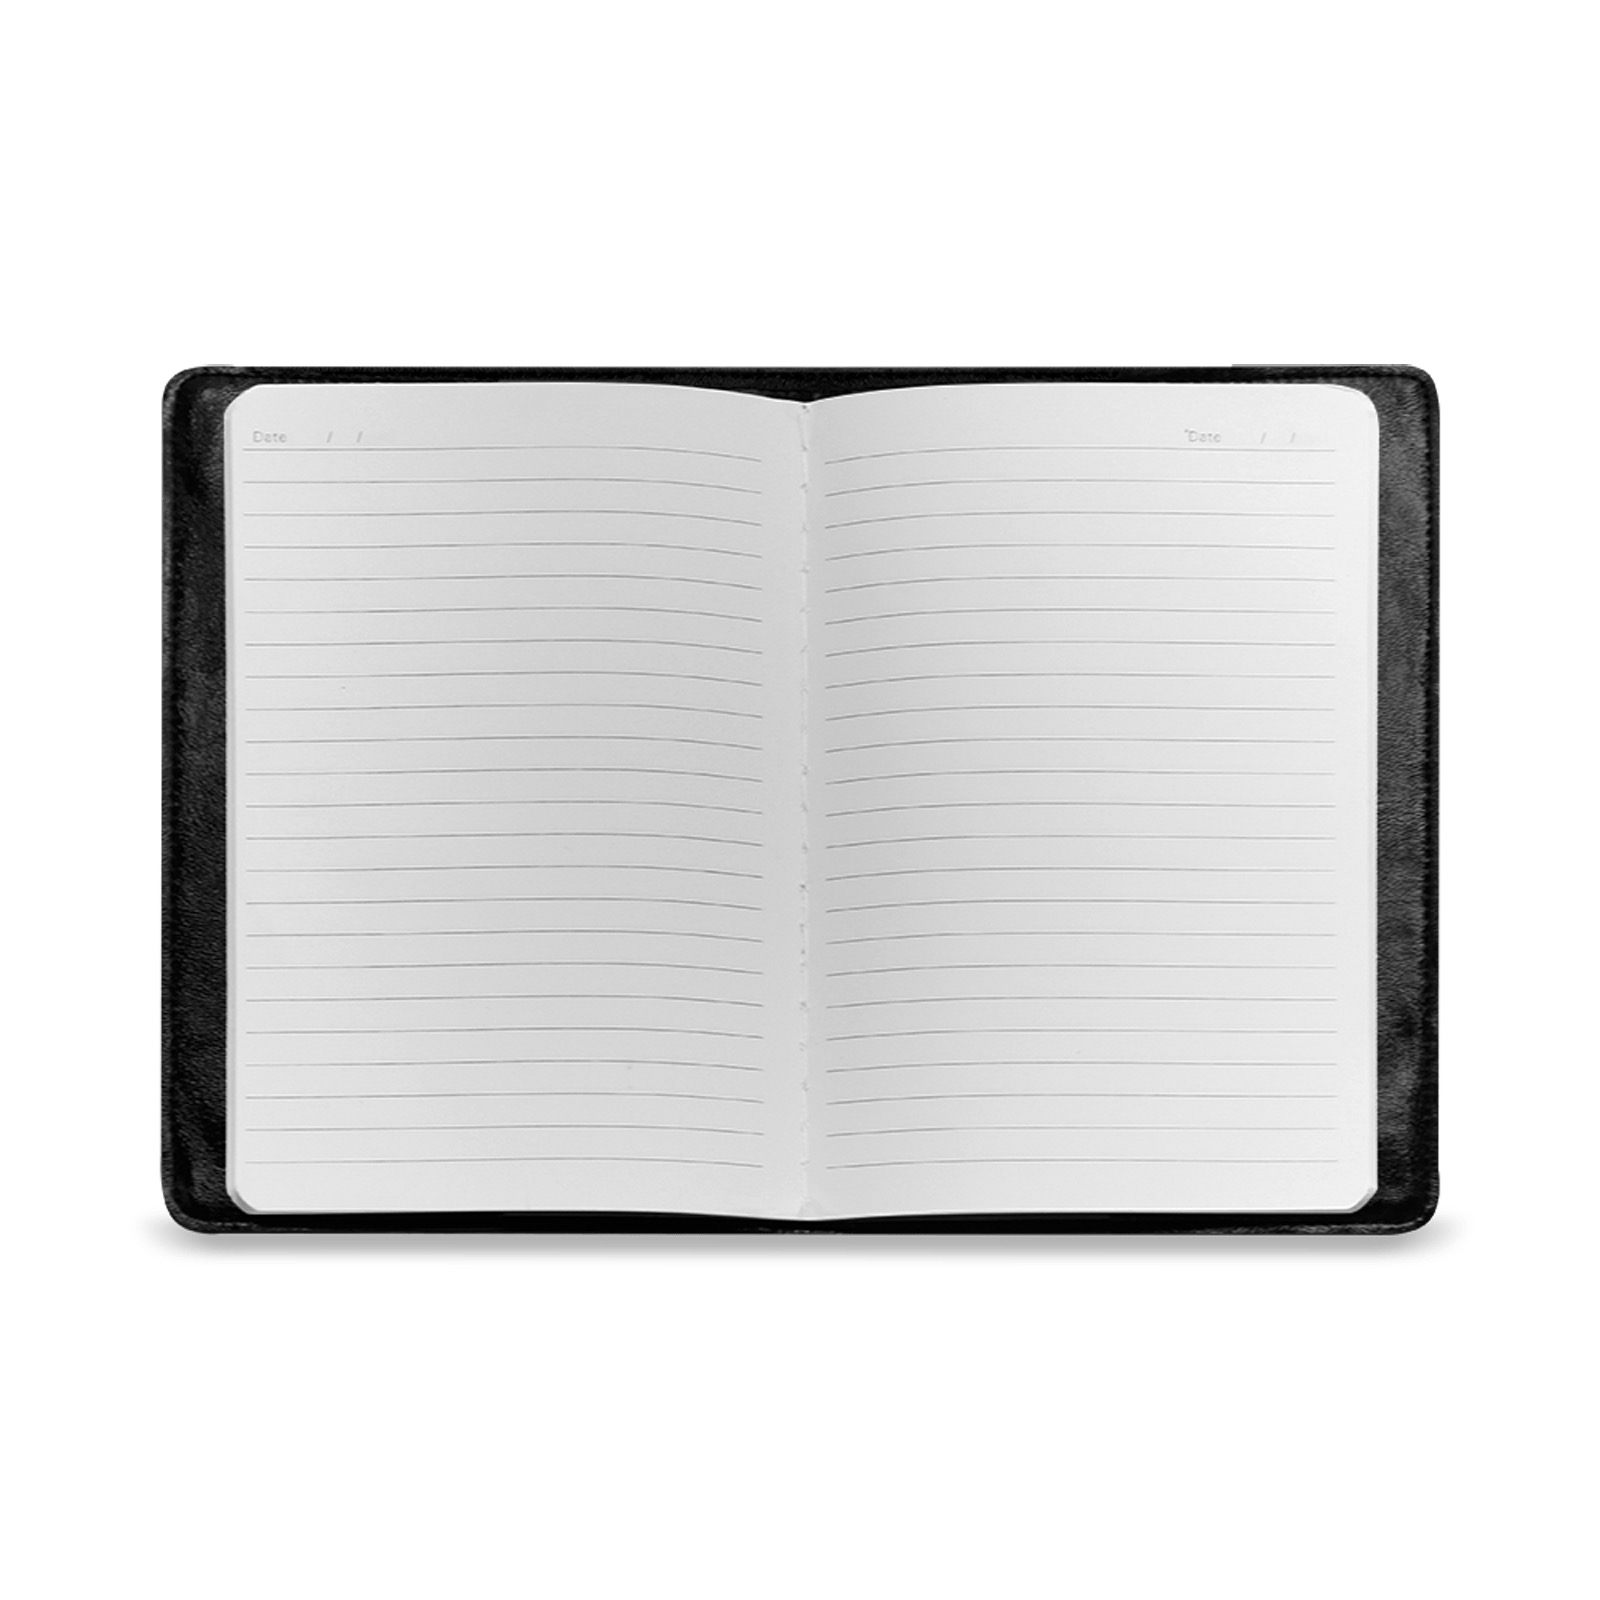 Girls Trip Leather Journal Custom NoteBook A5